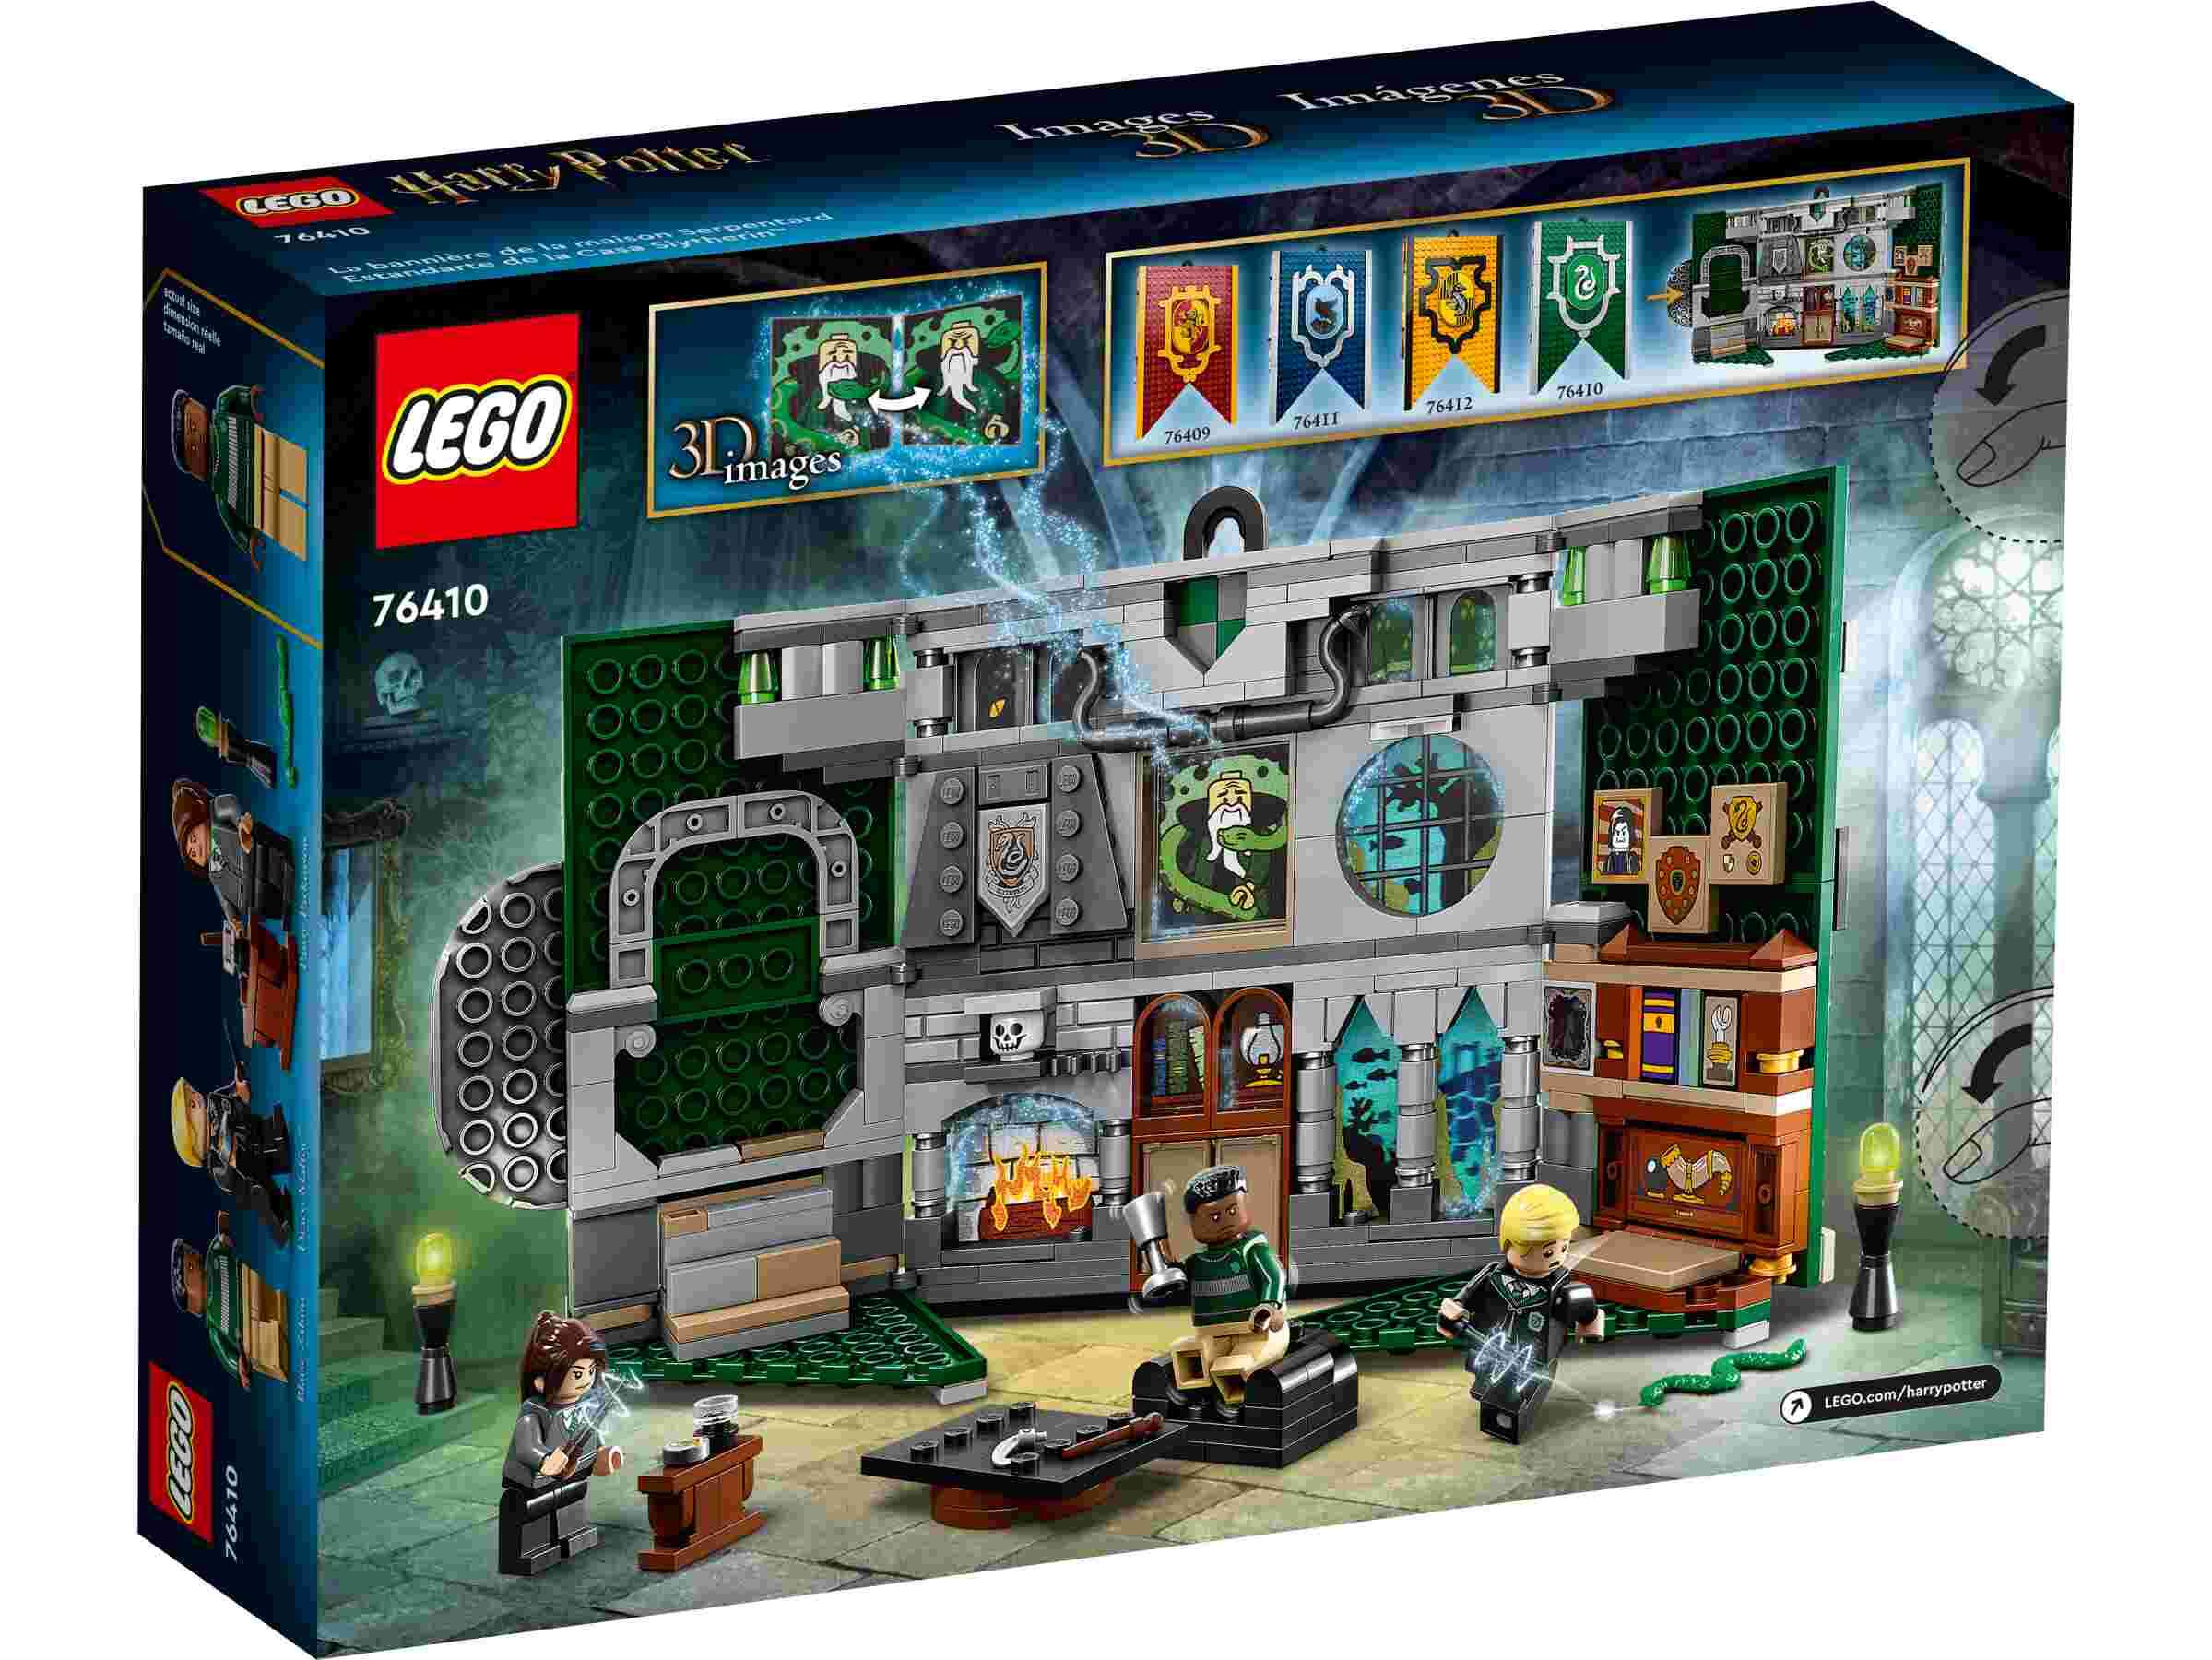 LEGO 76410 Harry Potter house Slytherin Toys Lobigo.co.uk: 3 Slytherin characters: Banner, House